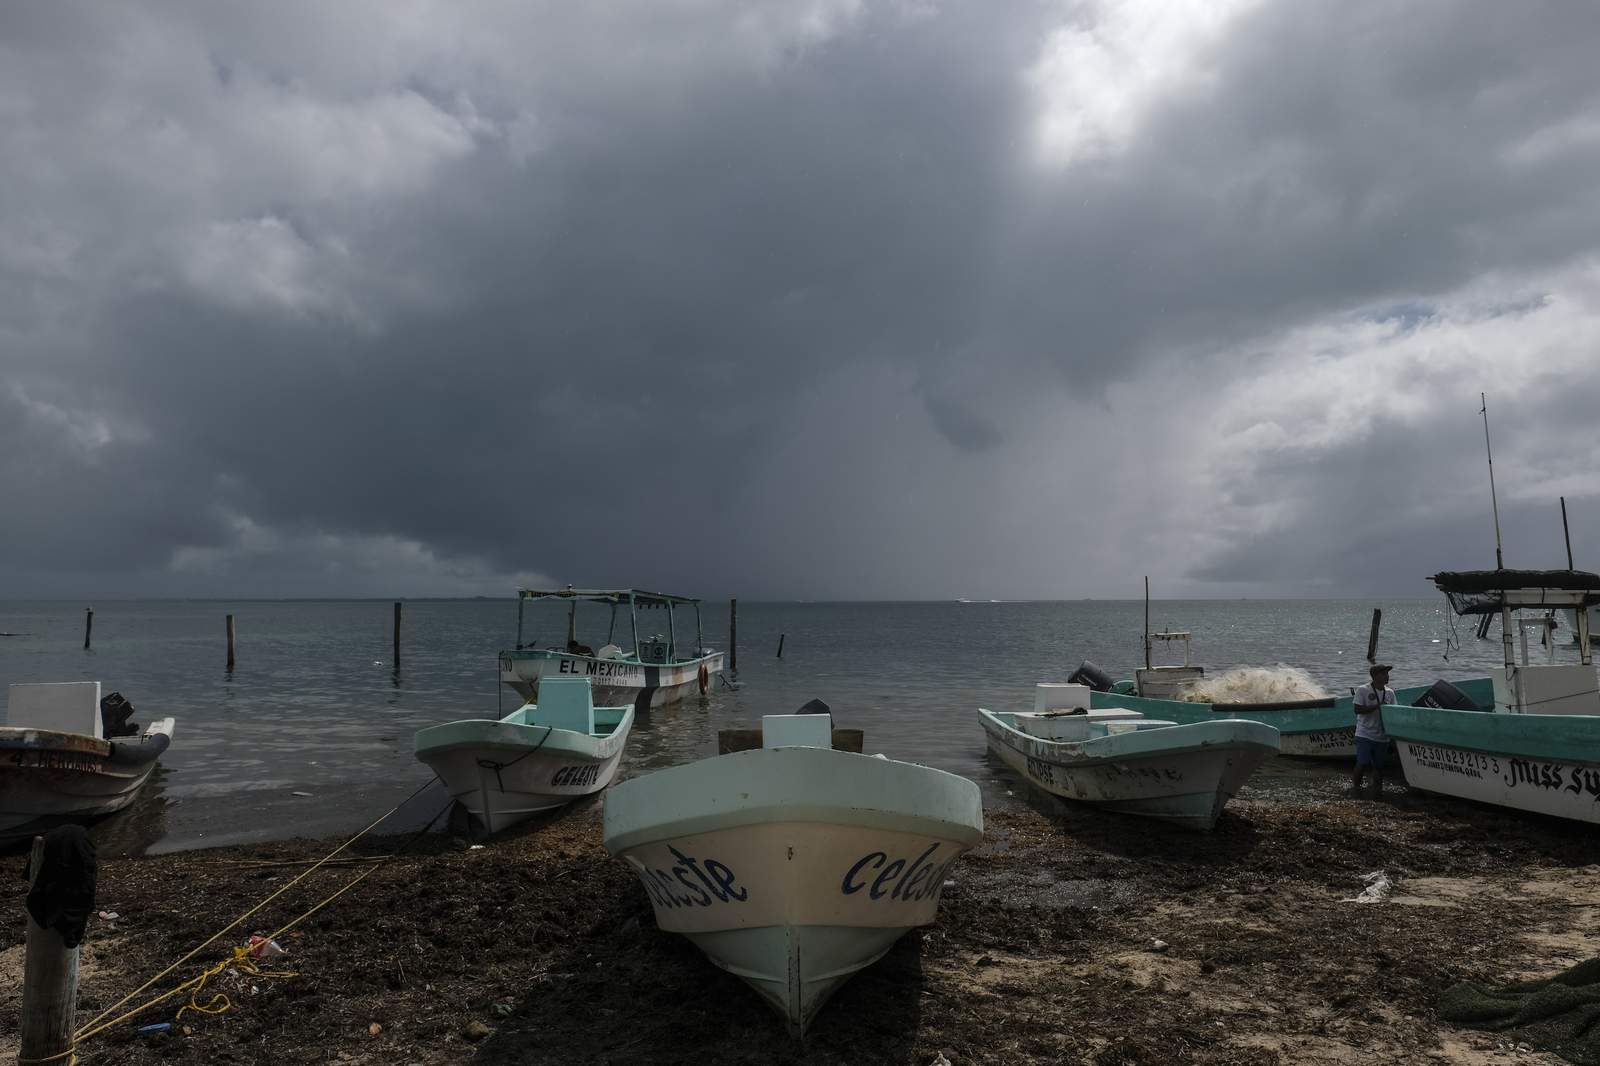 Category 4 Hurricane Delta roars toward Mexico's Cancun area